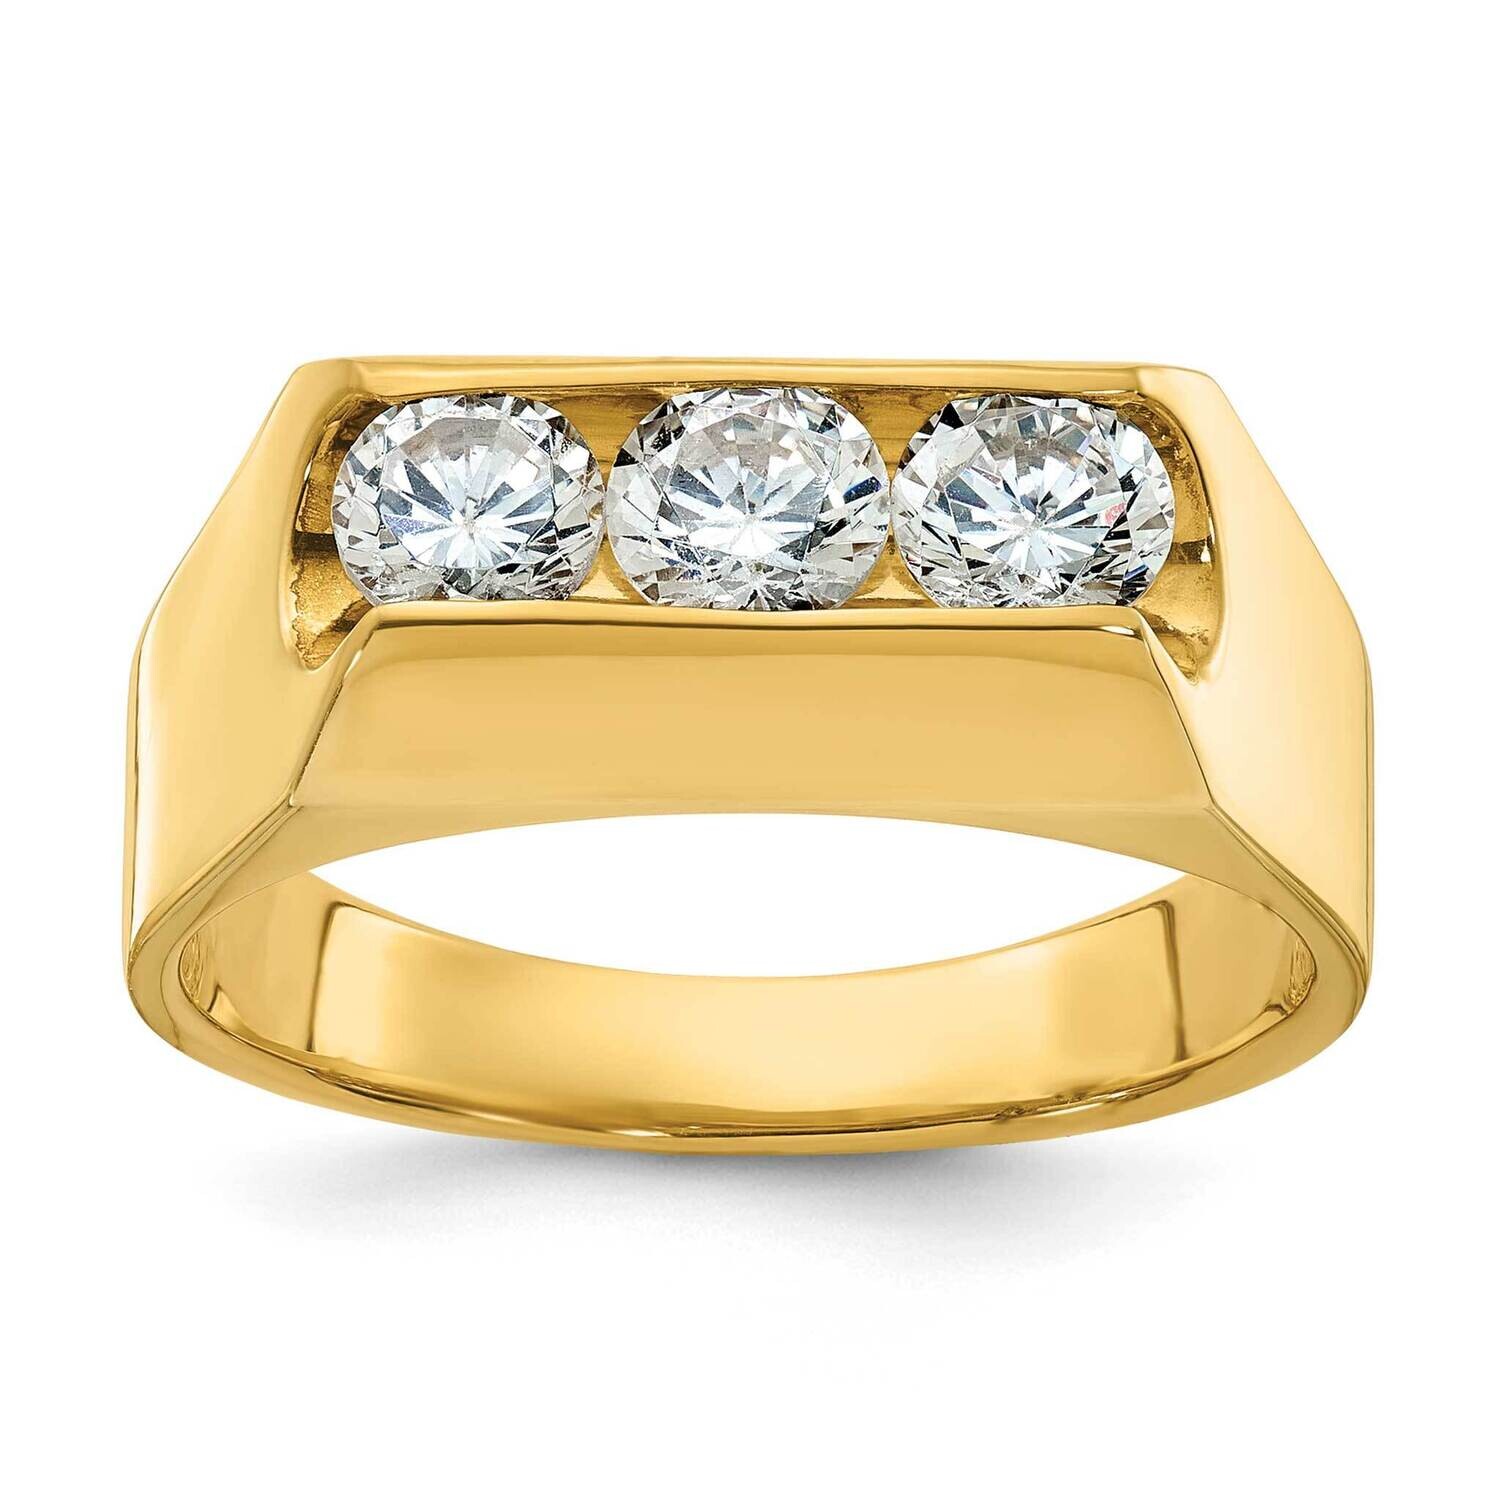 Ibgoodman Men's Polished 3-Stone 1 Carat Aa Quality Diamond Ring 14k Gold B59350-4YAA